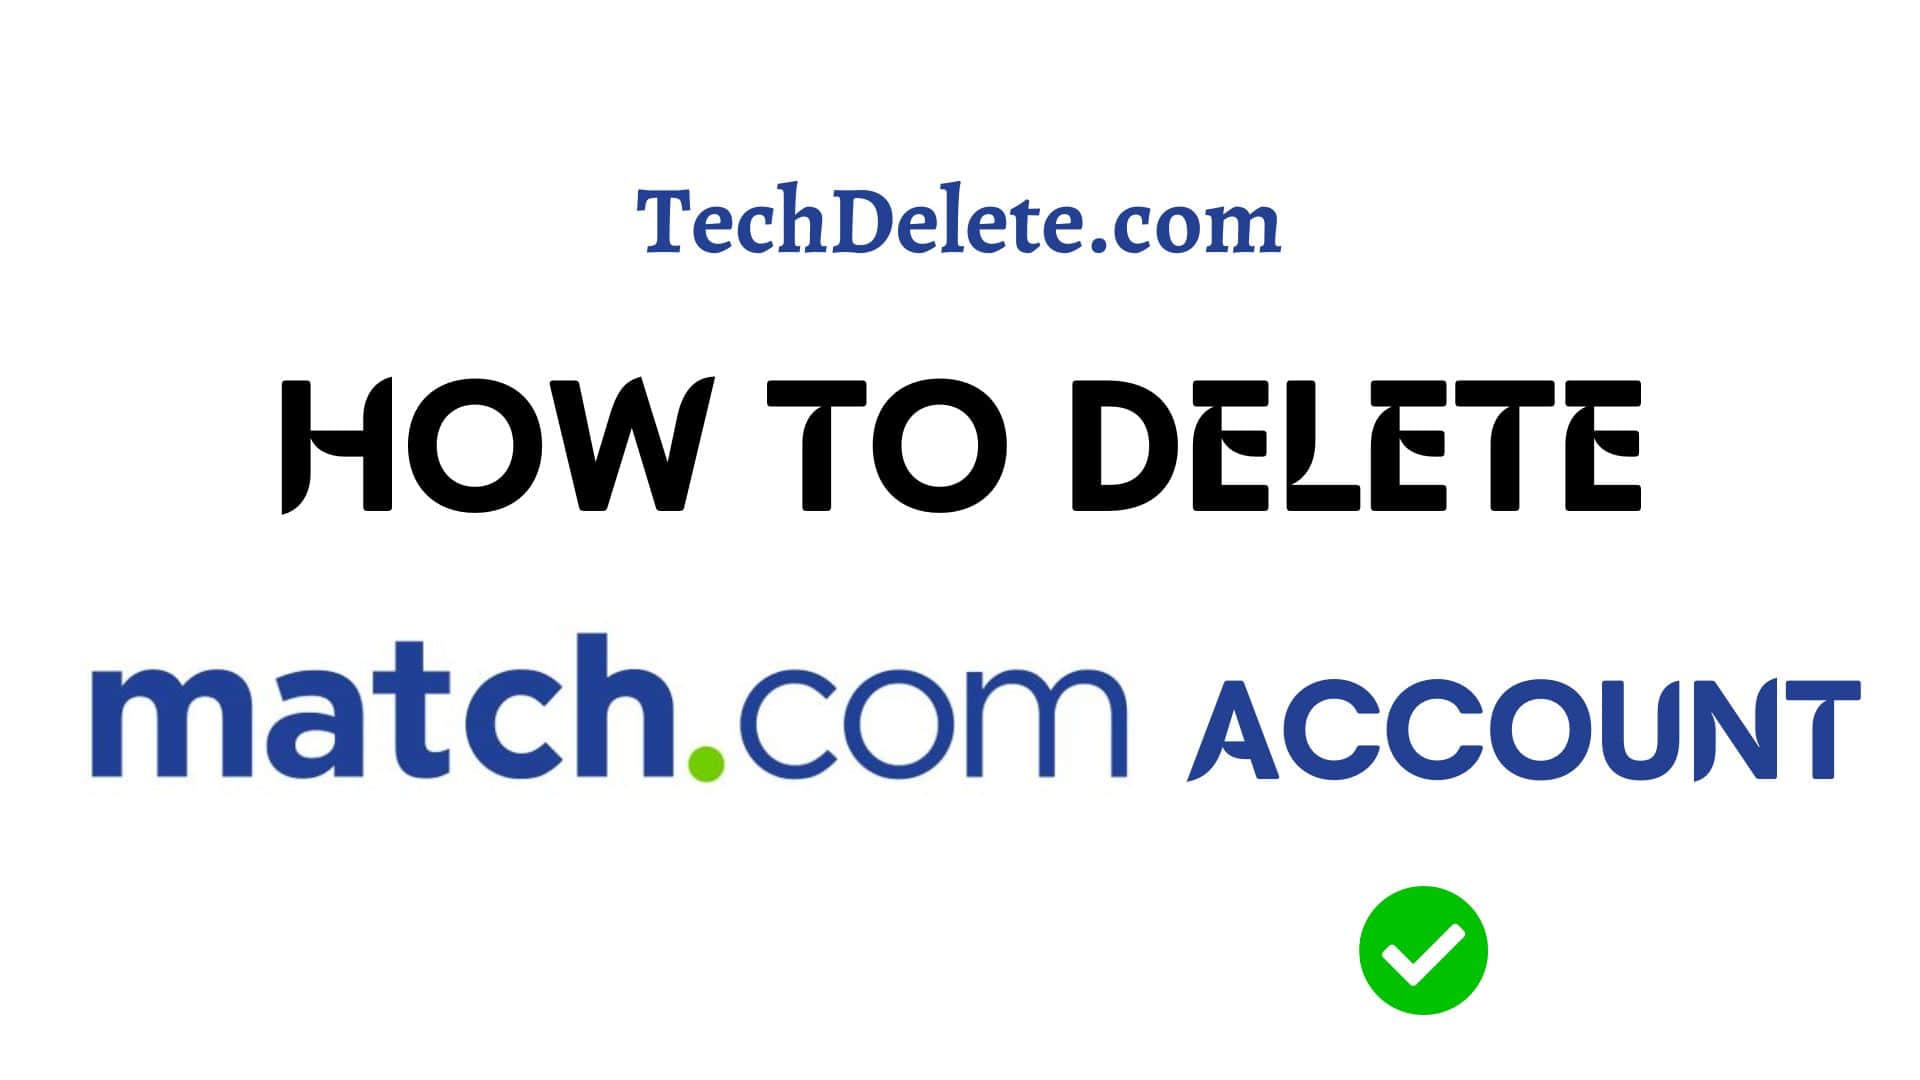 How to Delete Match.com Account